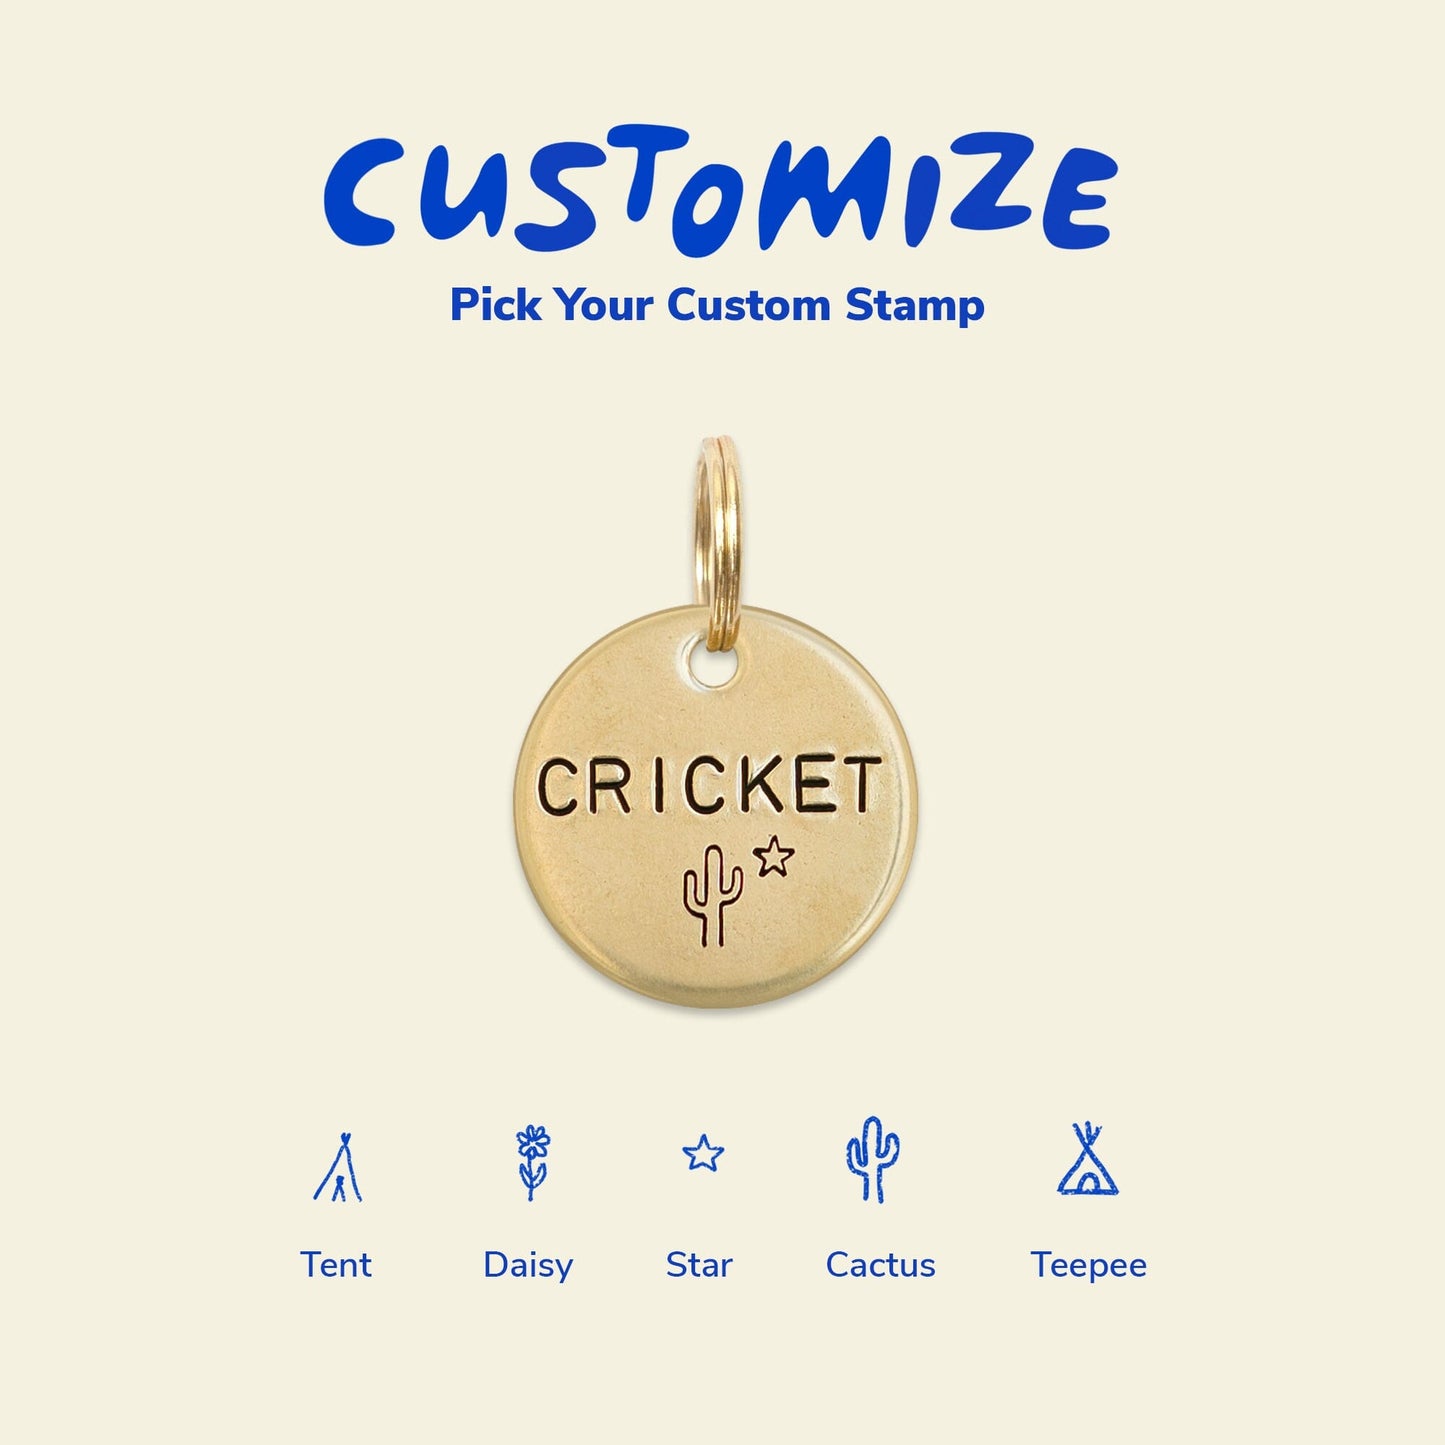 pick your custom stamp